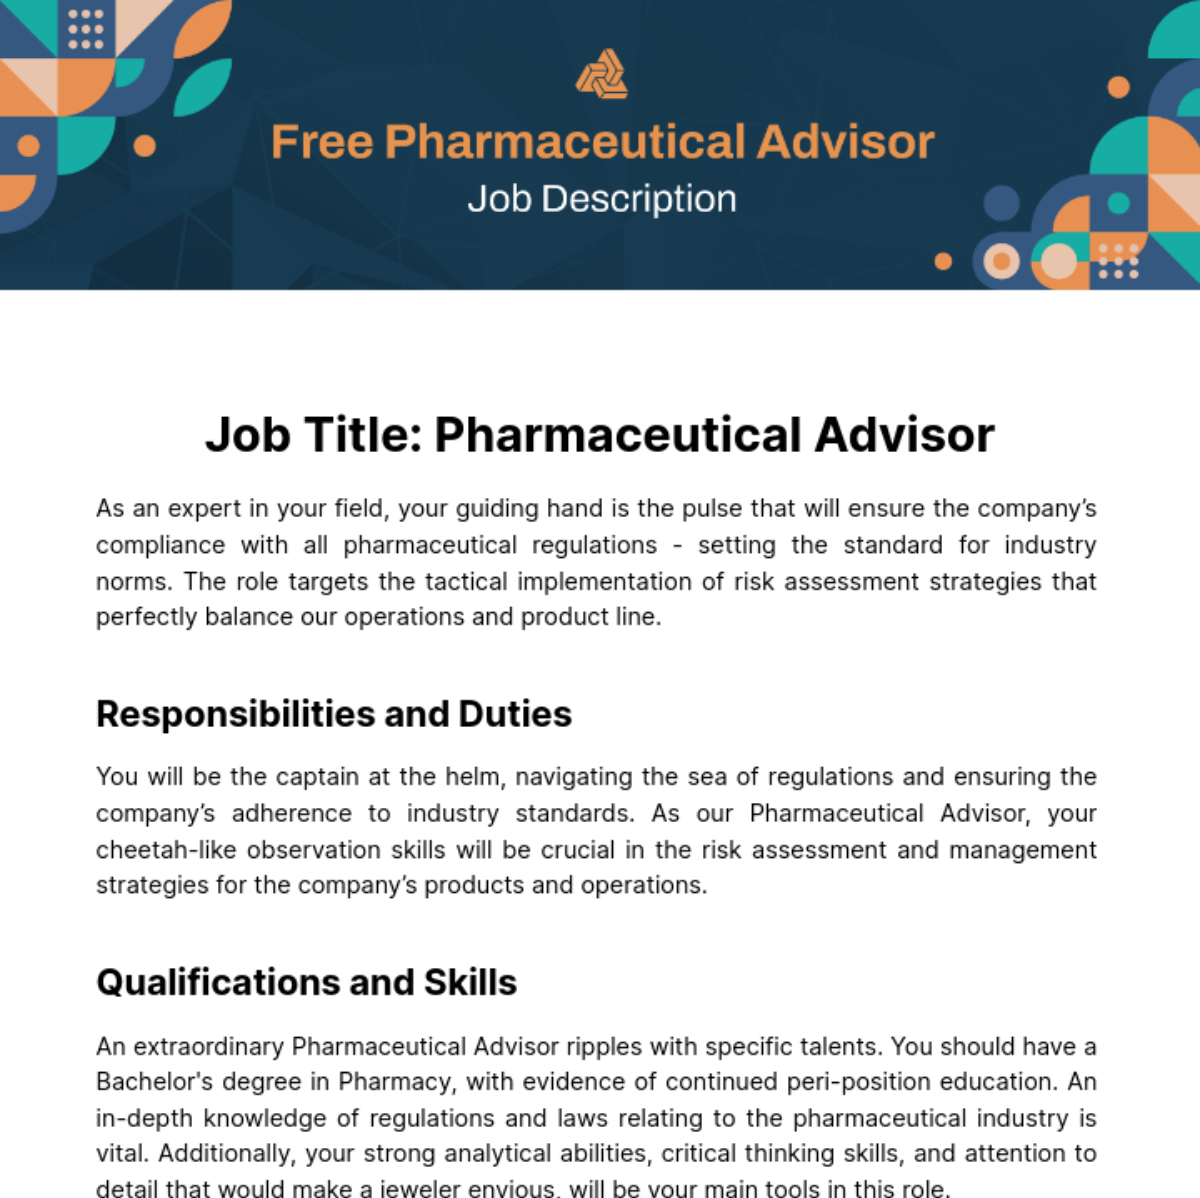 Free Pharmaceutical Advisor Job Description Template